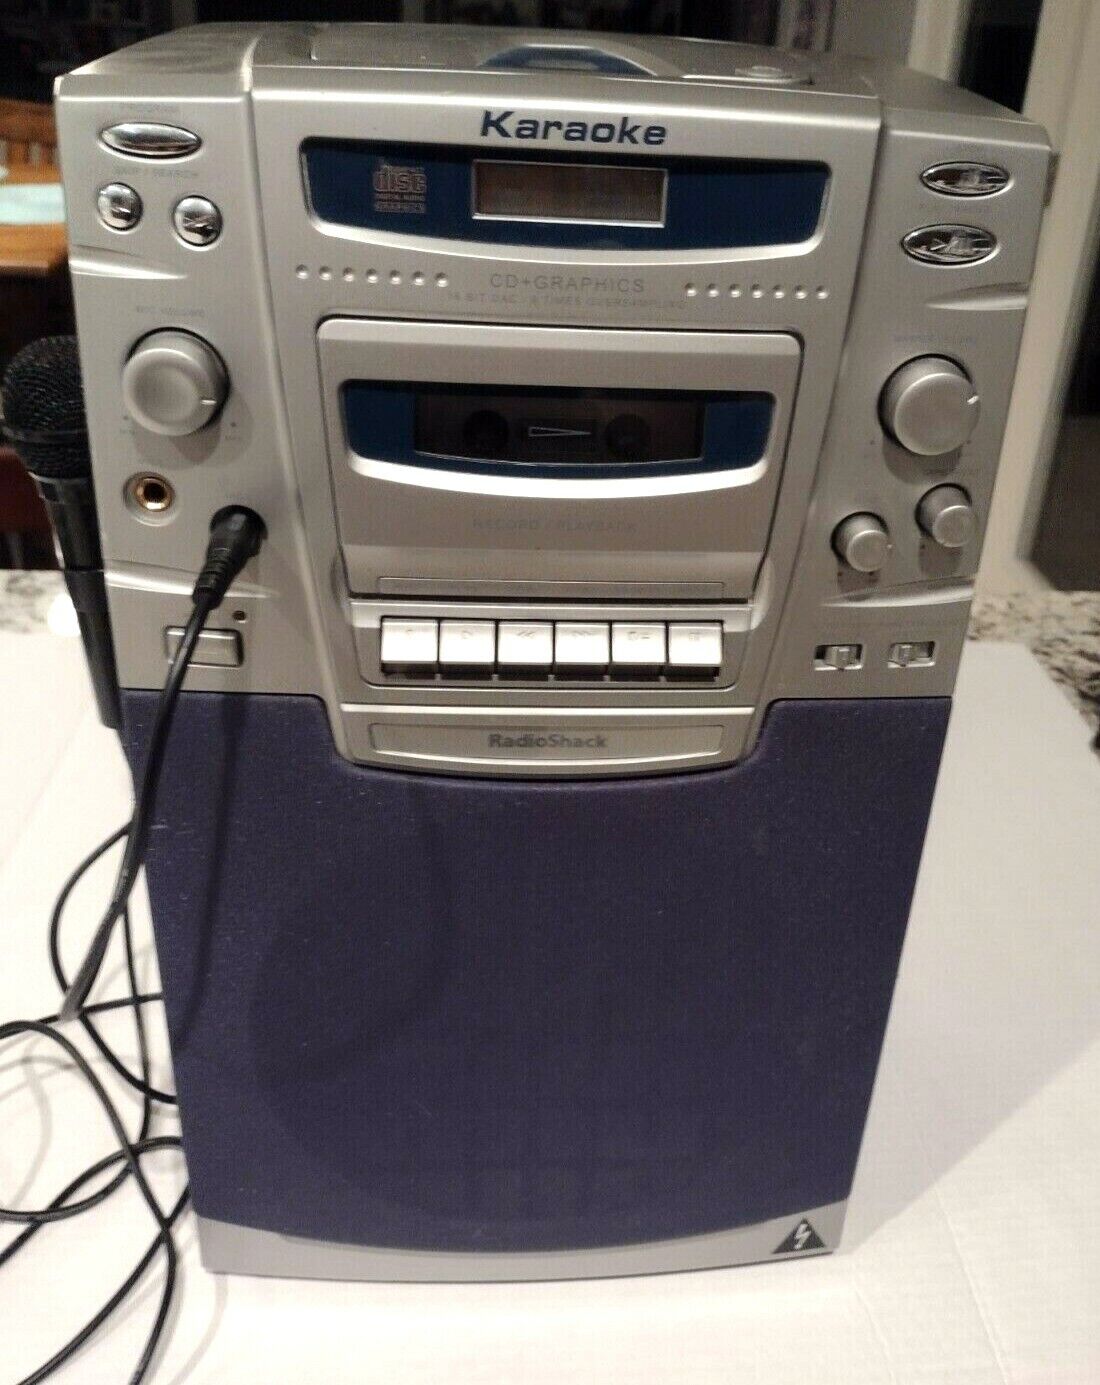 Radioshack Karaoke Cd Plus Graphics Cd + G Sing Along Microphone Model 32-1171